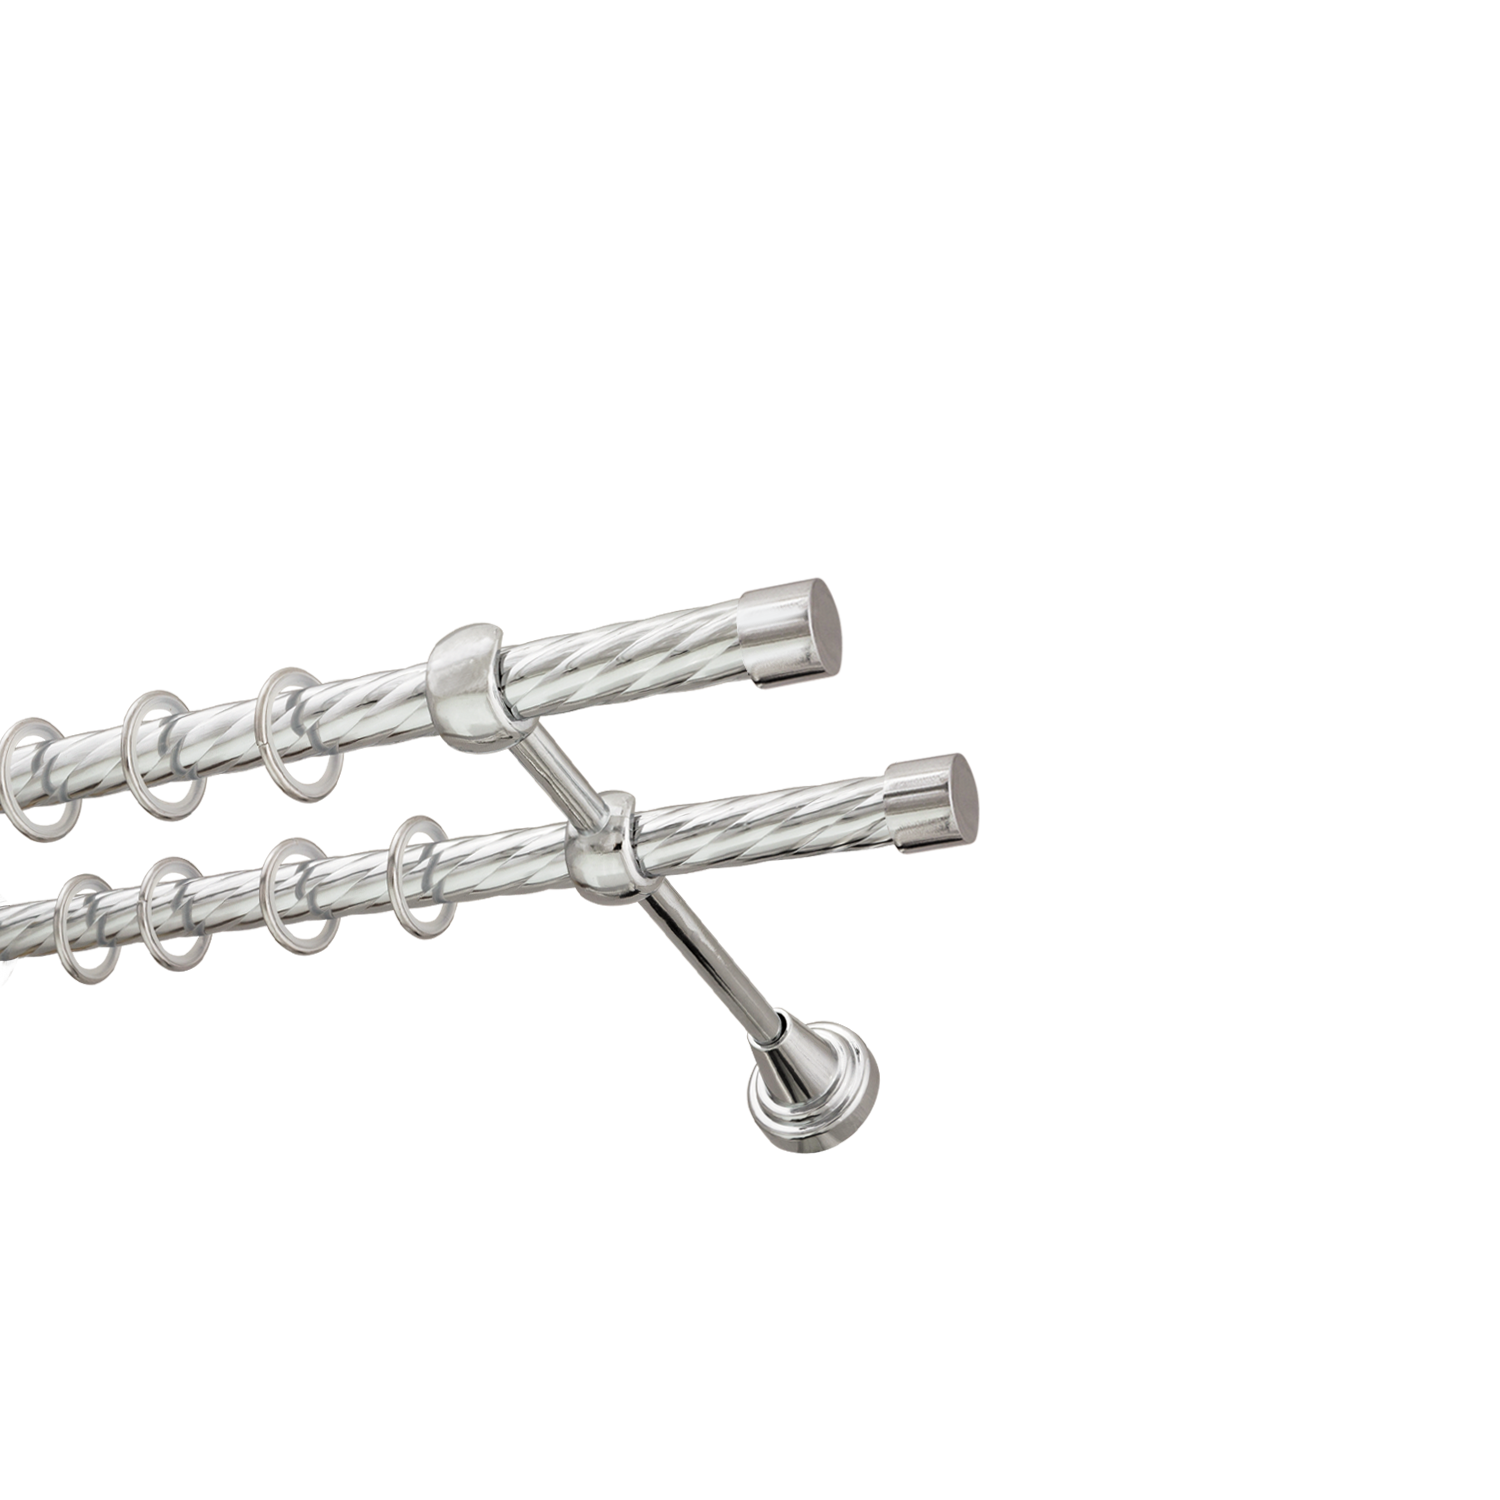 Металлический карниз для штор Заглушка, двухрядный 16/16 мм, серебро, витая штанга, длина 300 см - фото Wikidecor.ru